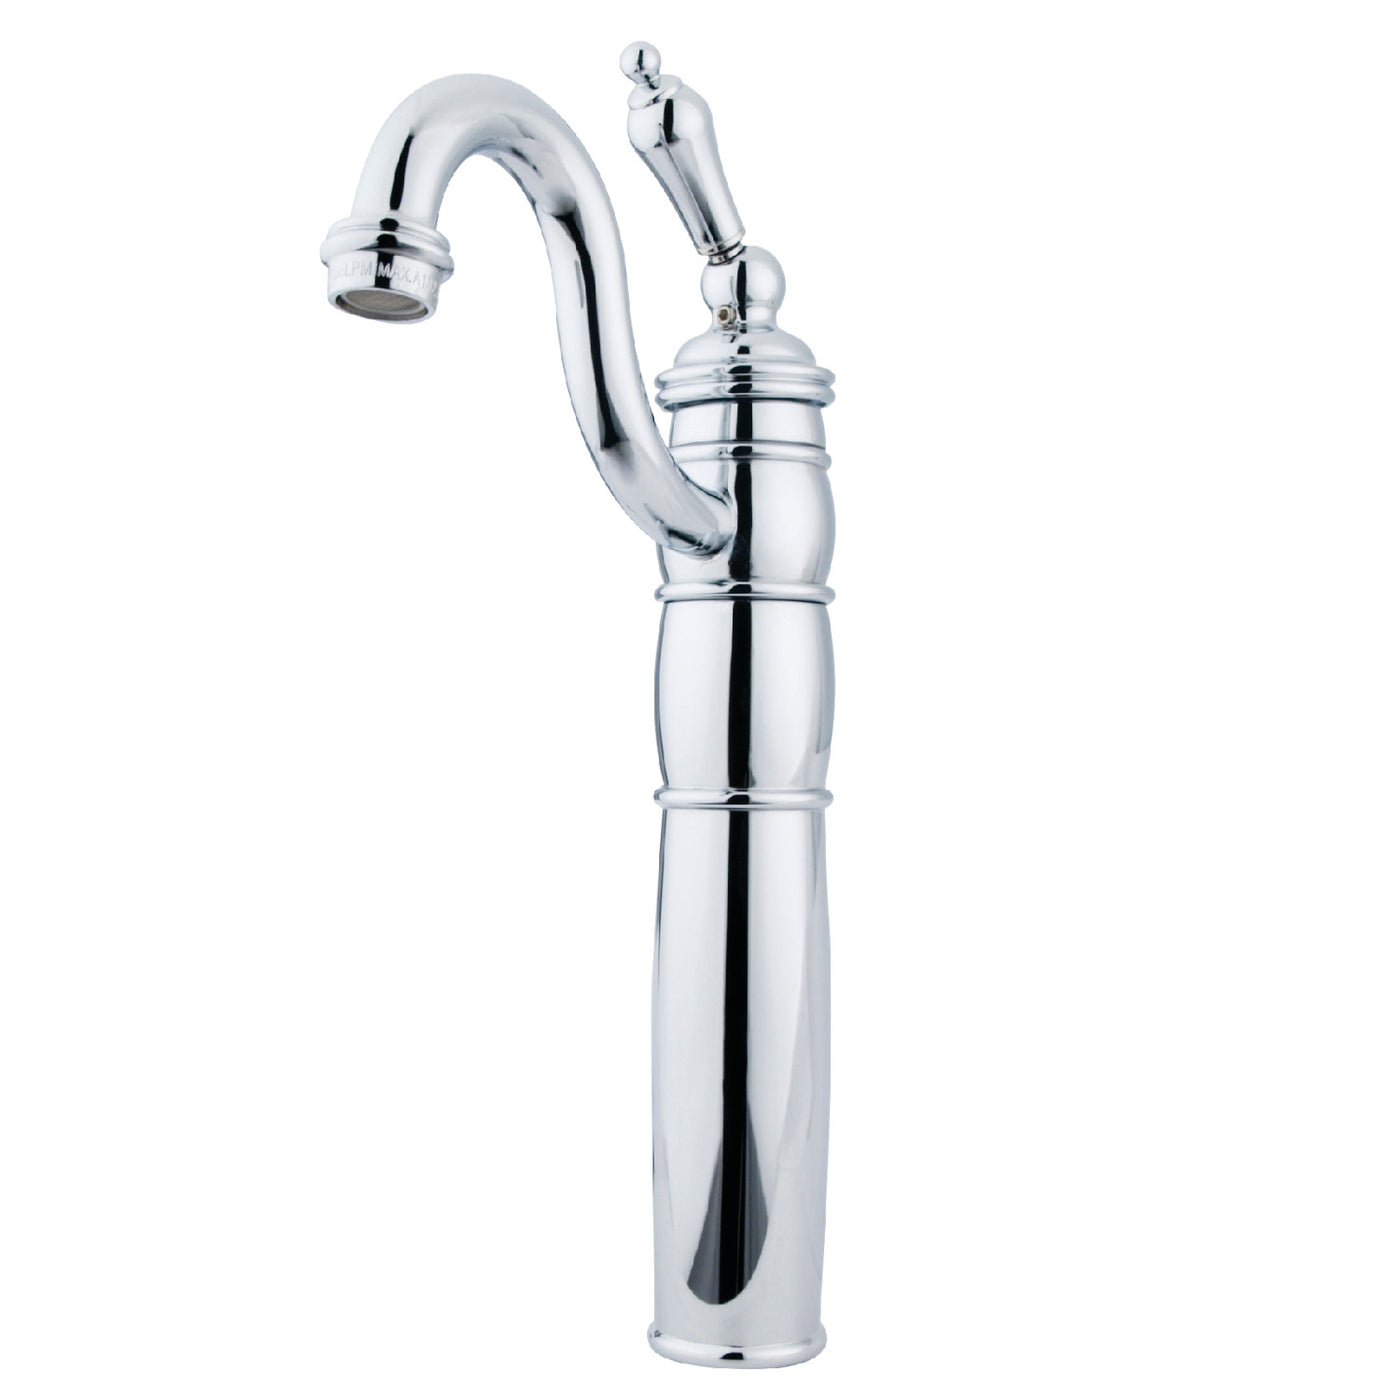 Elements of Design EB1421AL Vessel Sink Faucet, Polished Chrome